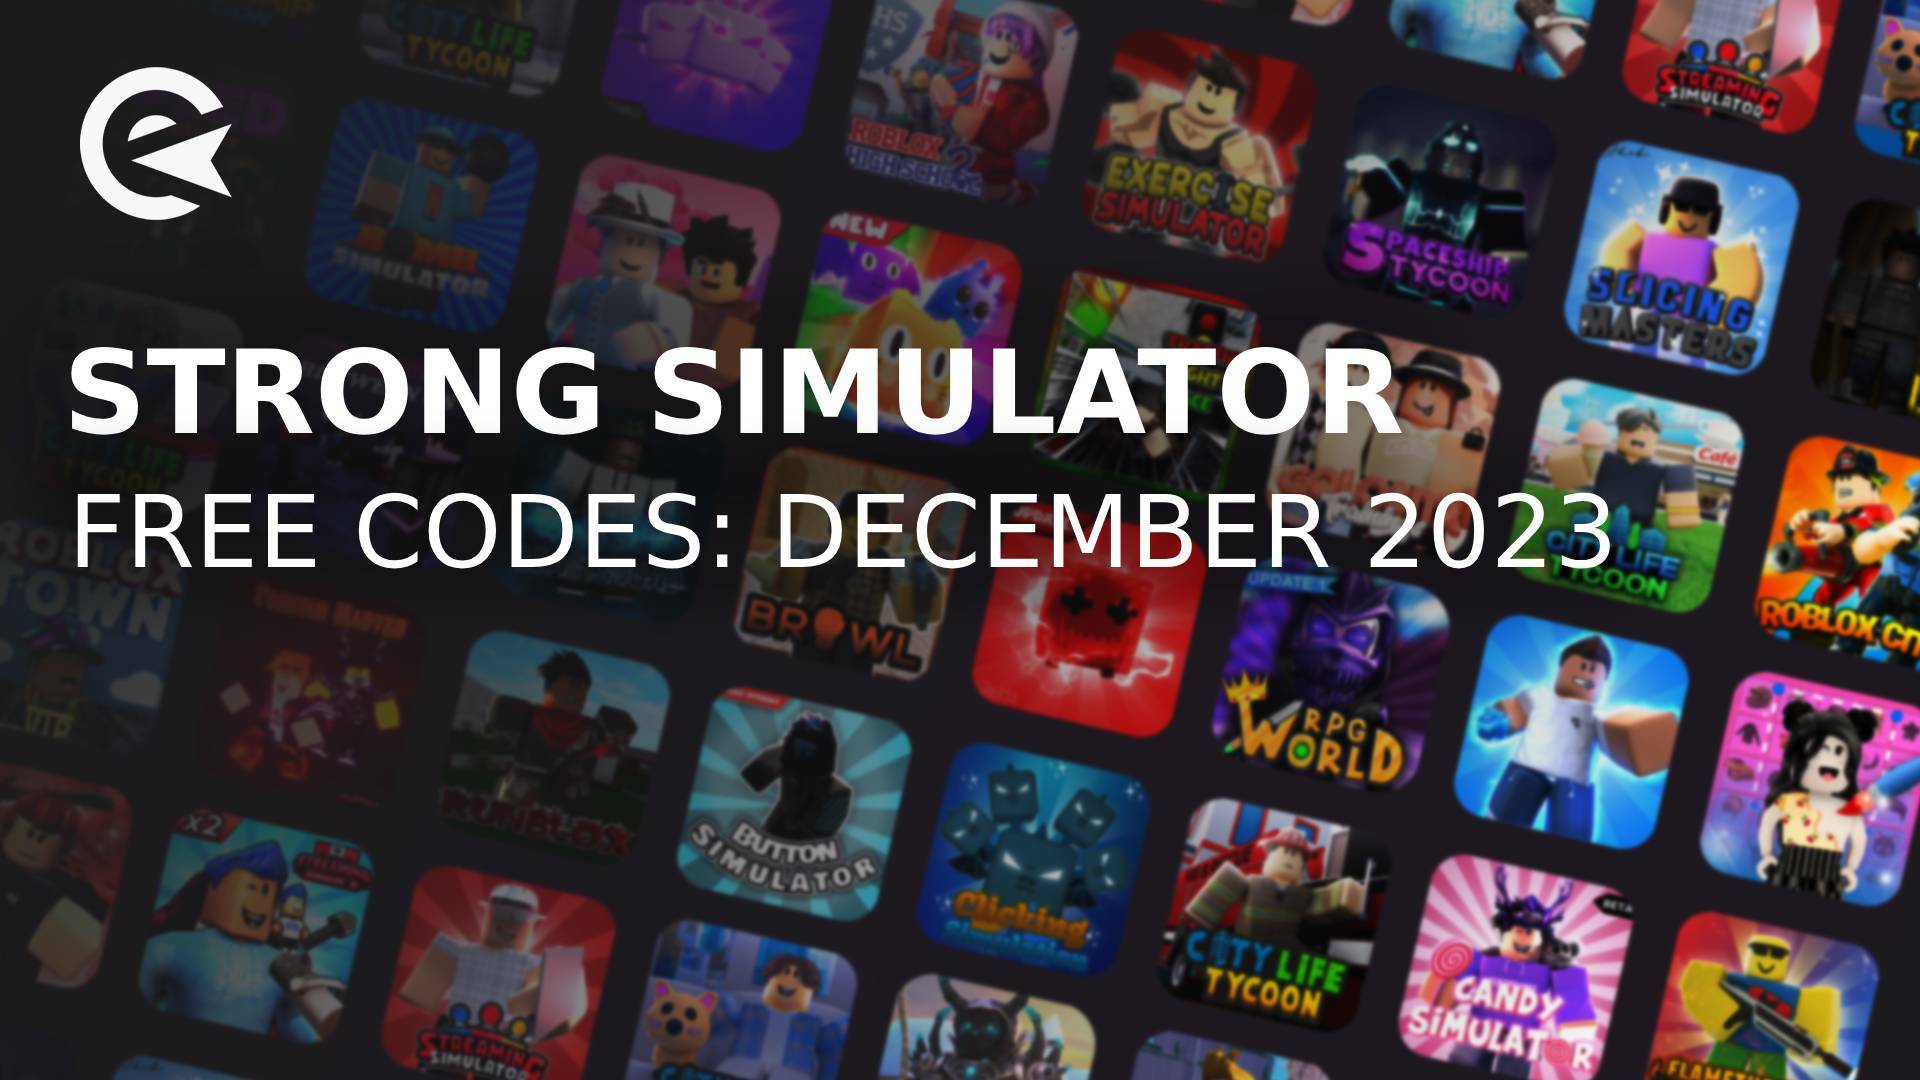 Stud Jump Simulator Codes - Roblox December 2023 